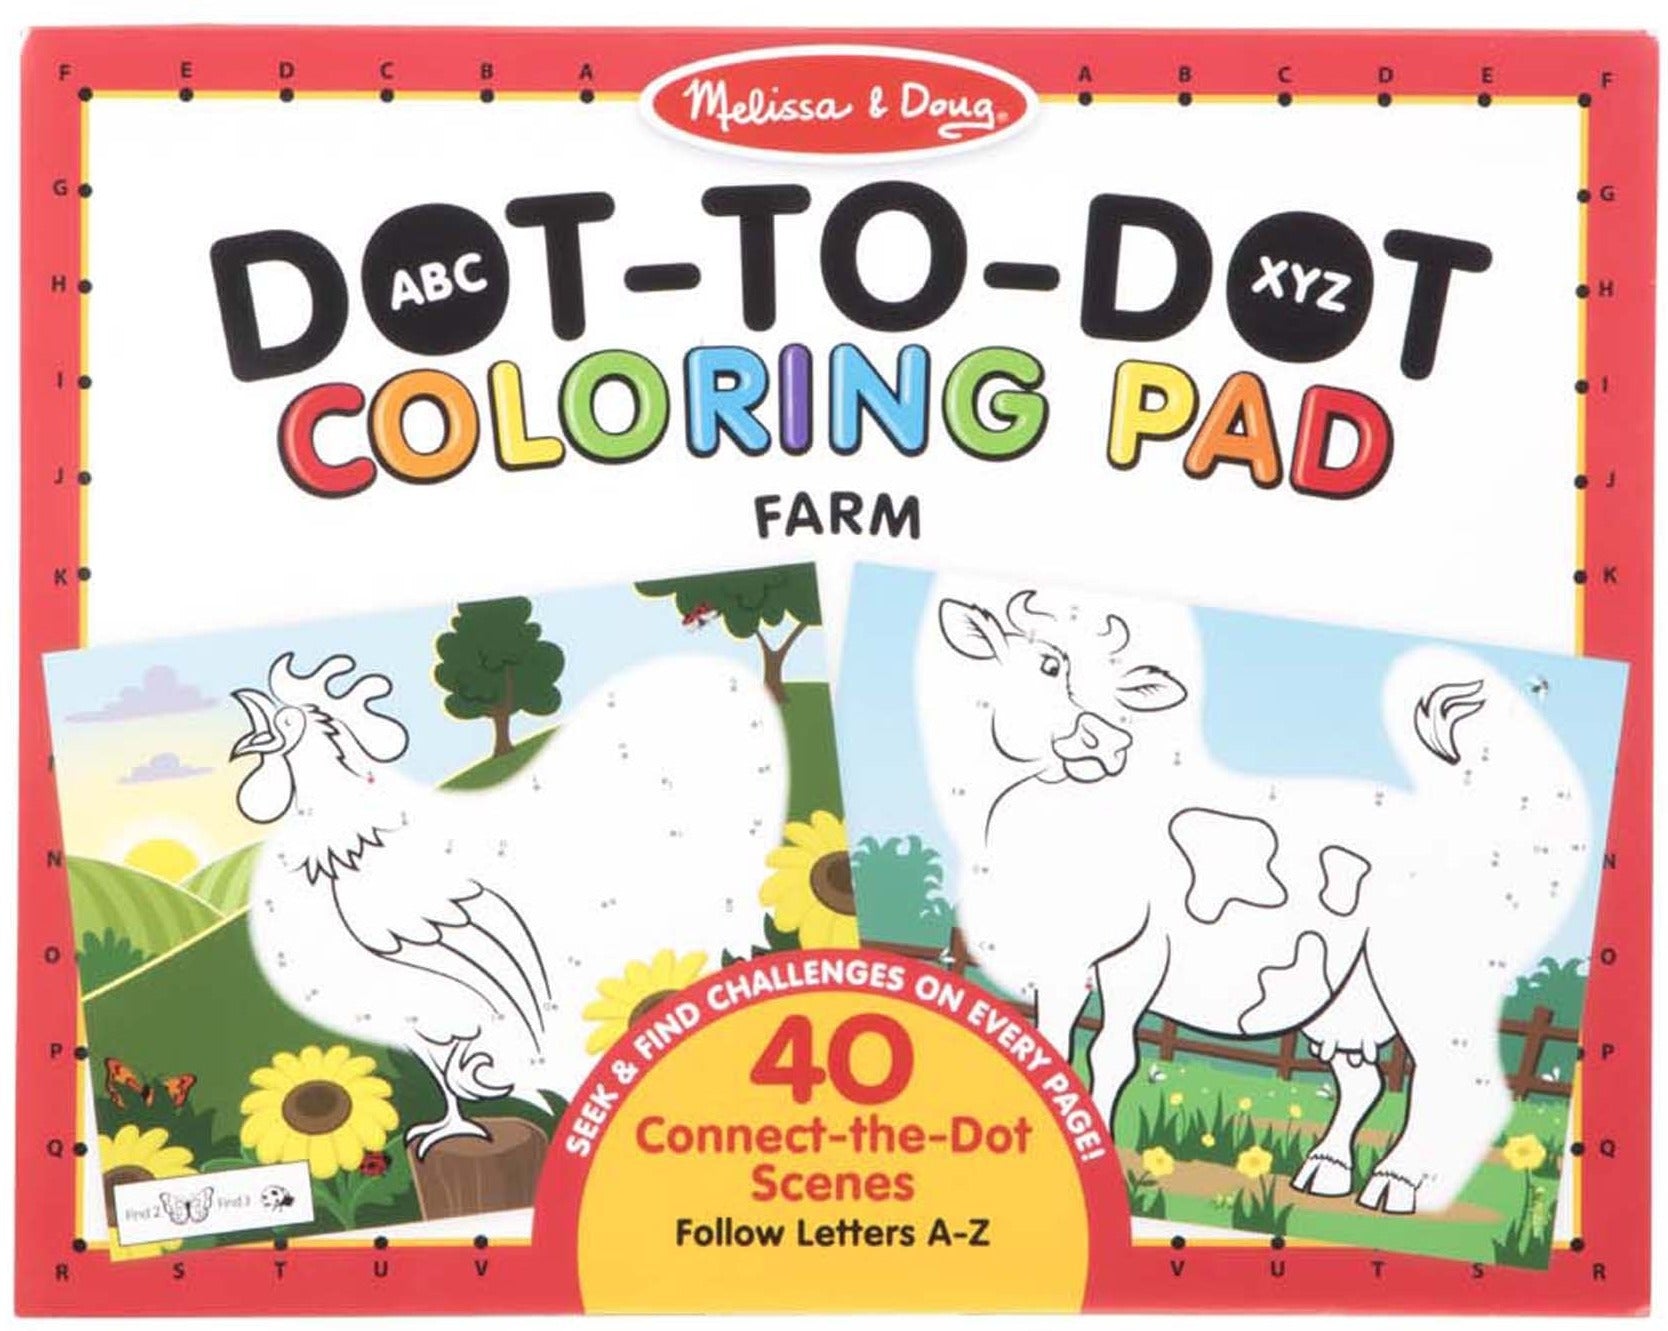 ABC Dot-to-Dot Farm Coloring Pad